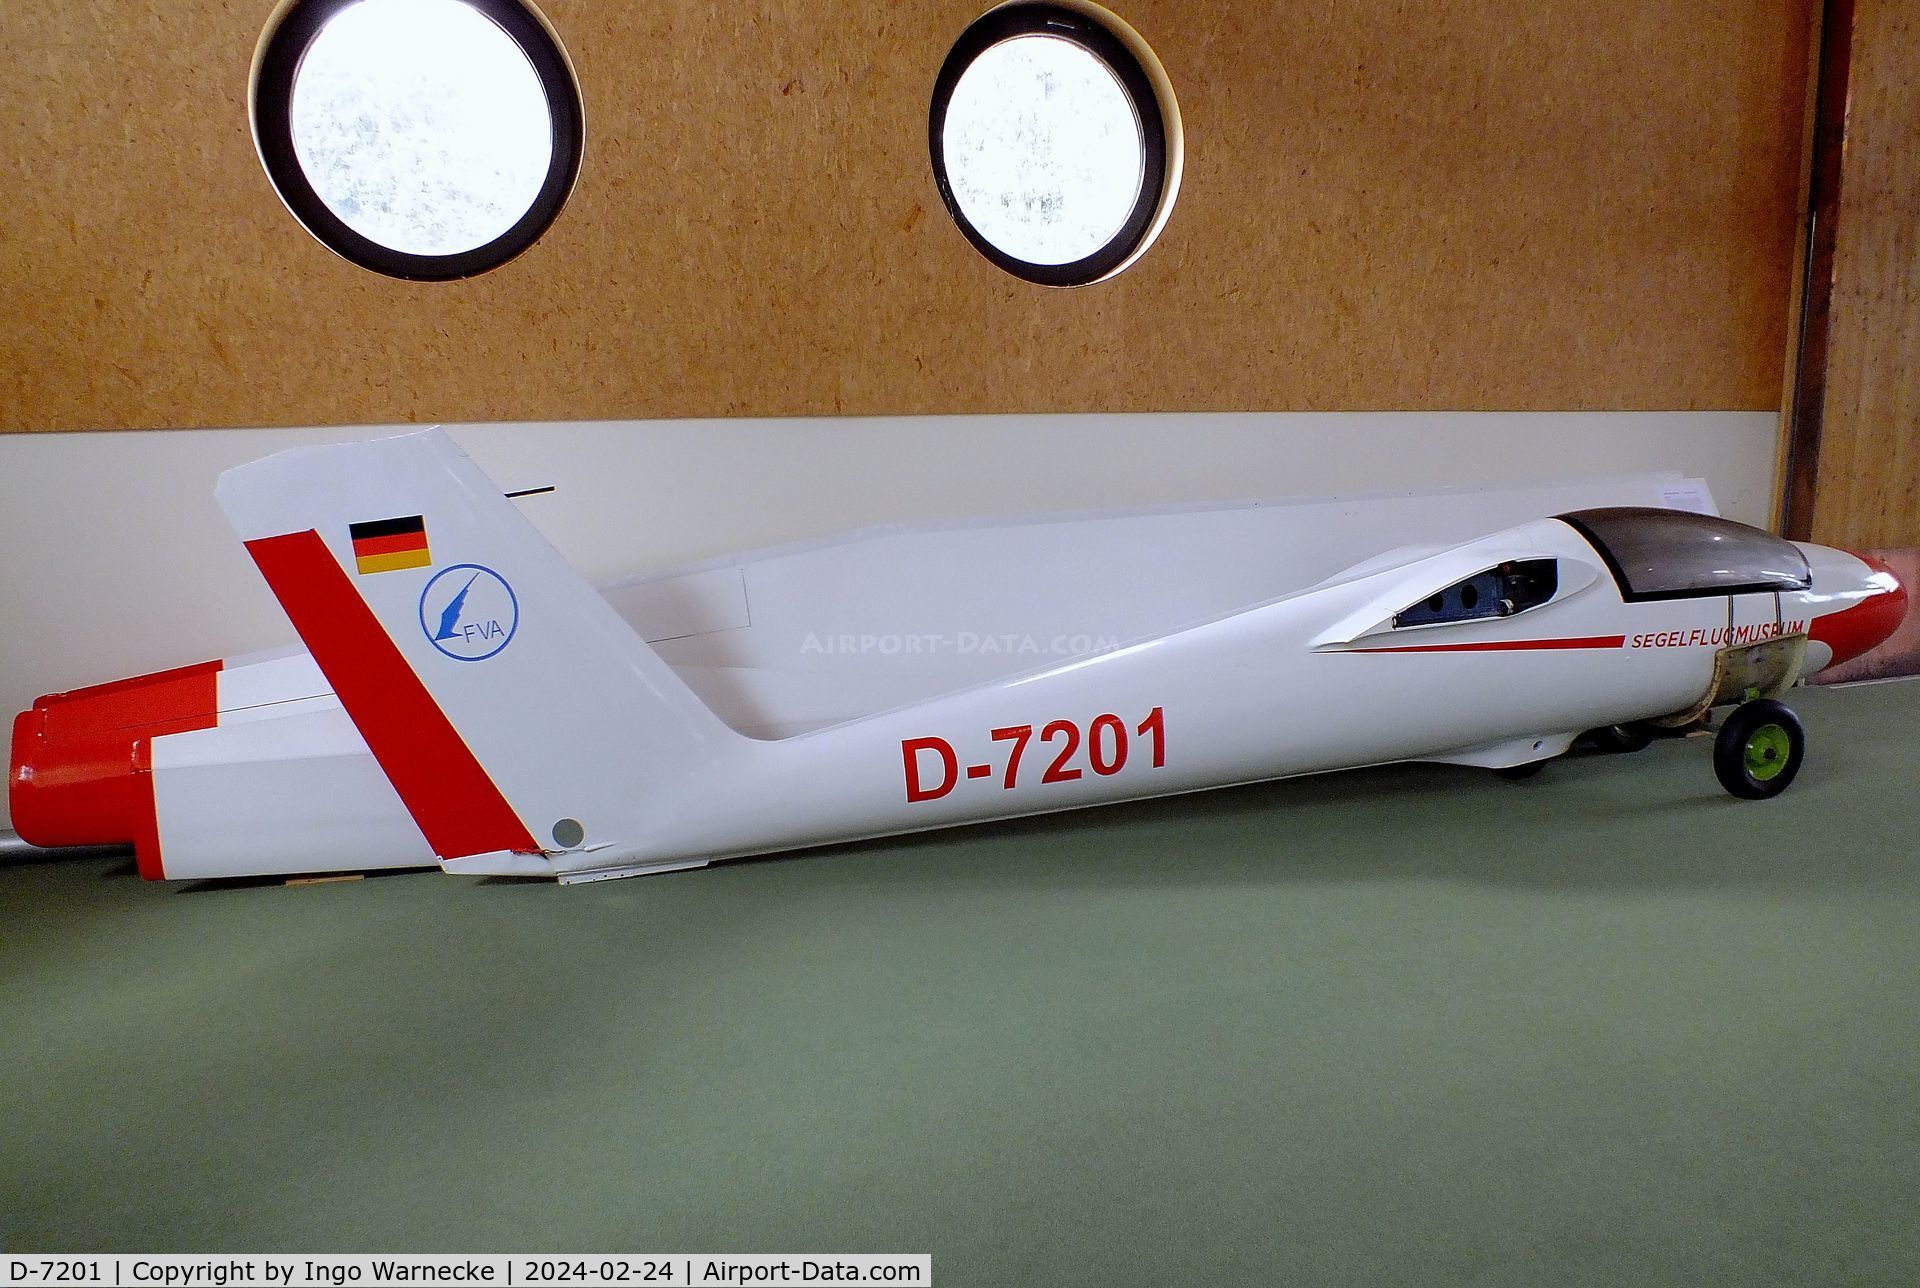 D-7201, 1966 Basten B4 C/N V-1, Basten B4 (first prototype of Pilatus P4) at the Deutsches Segelflugmuseum mit Modellflug (German Soaring Museum with Model Flight), Gersfeld Wasserkuppe